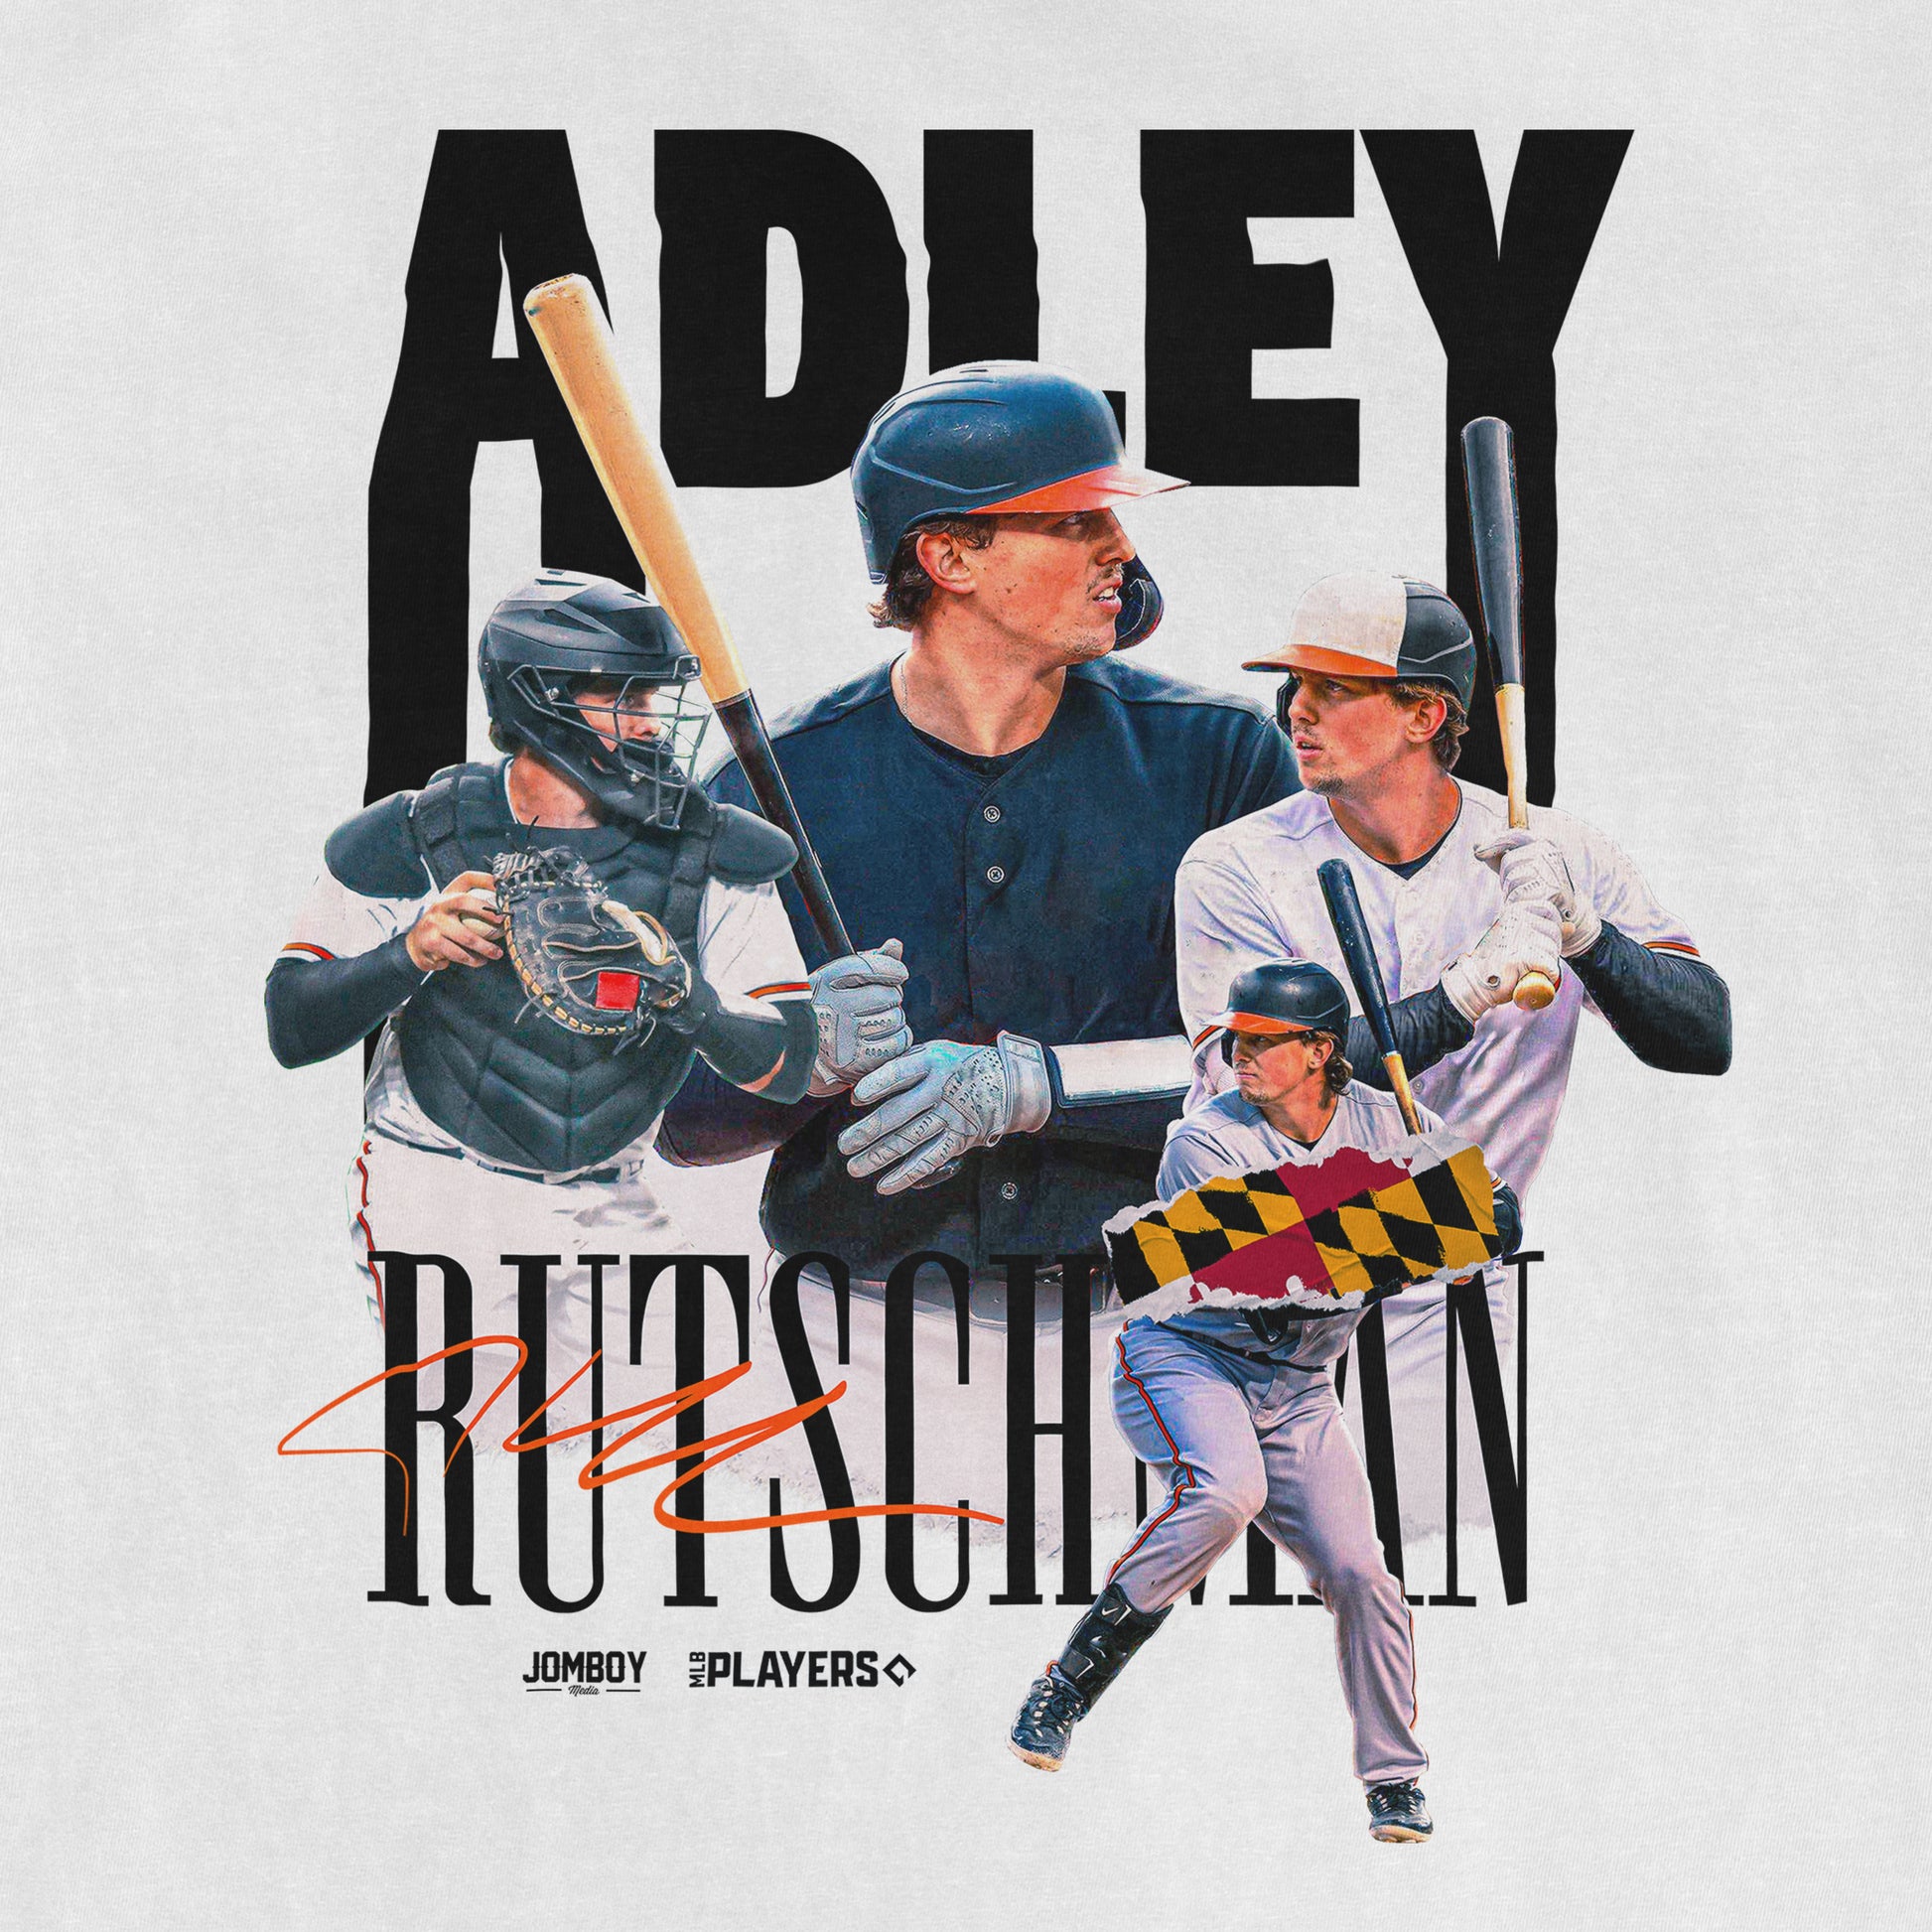 Adley Rutschman Retro 90s Shirt